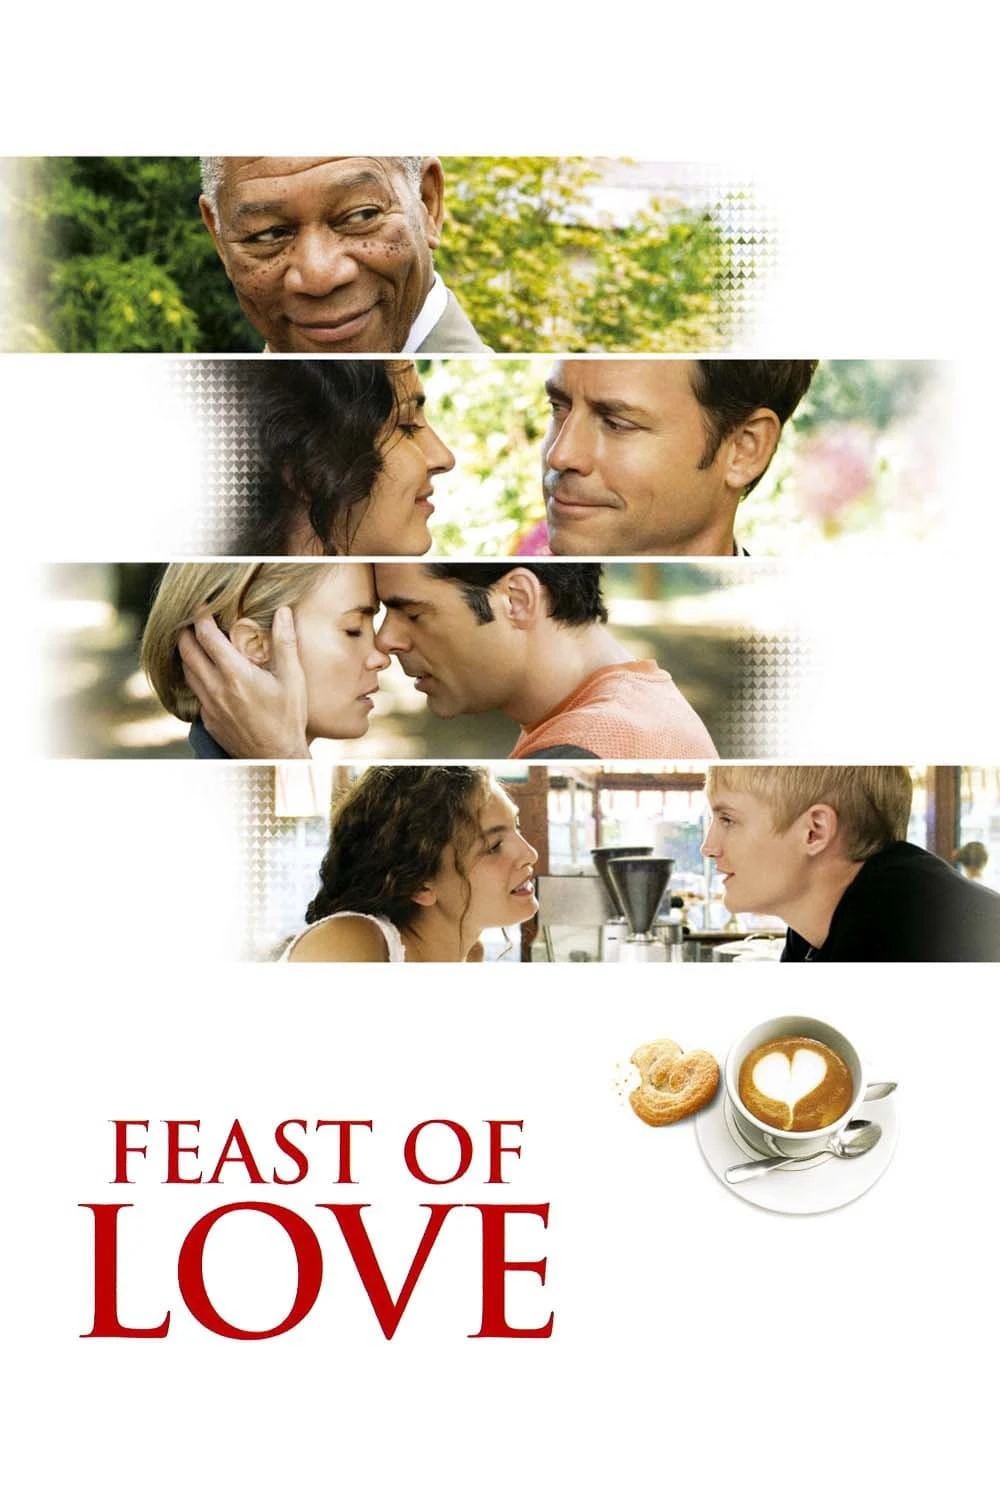 Feast of Love | Feast of Love (2007)